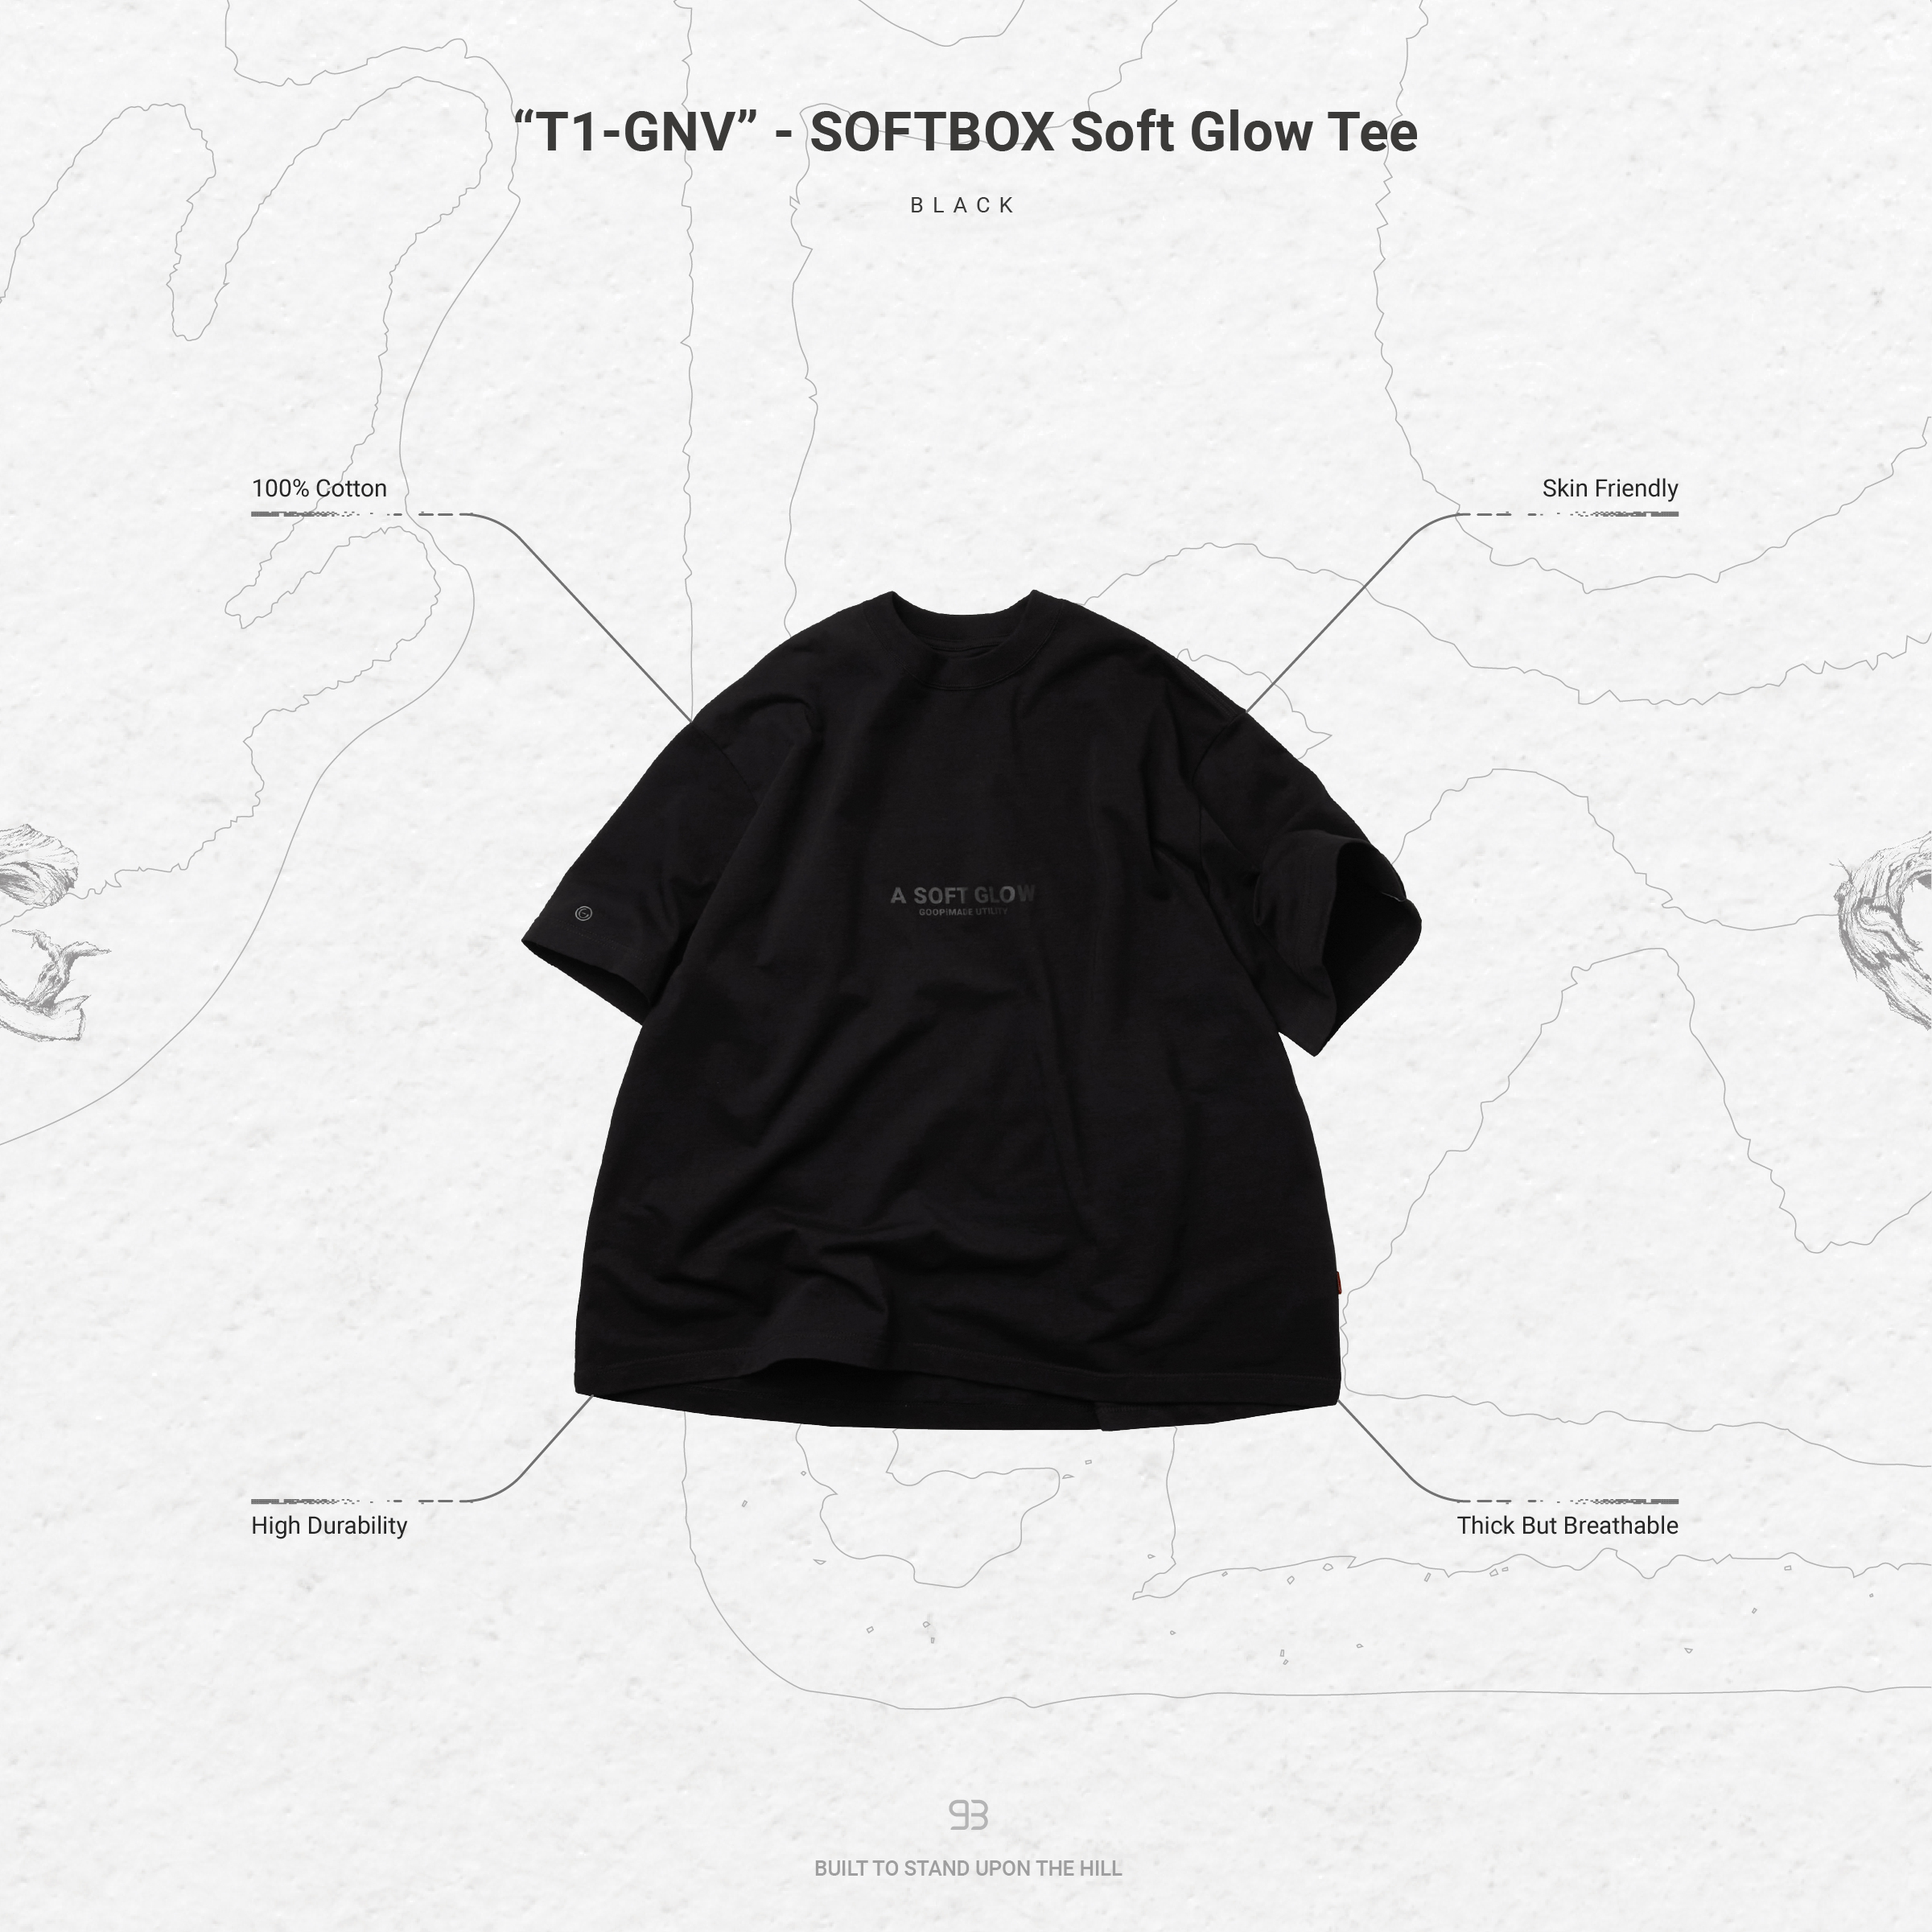 T1-GNV” - SOFTBOX Soft Glow Tee - Black